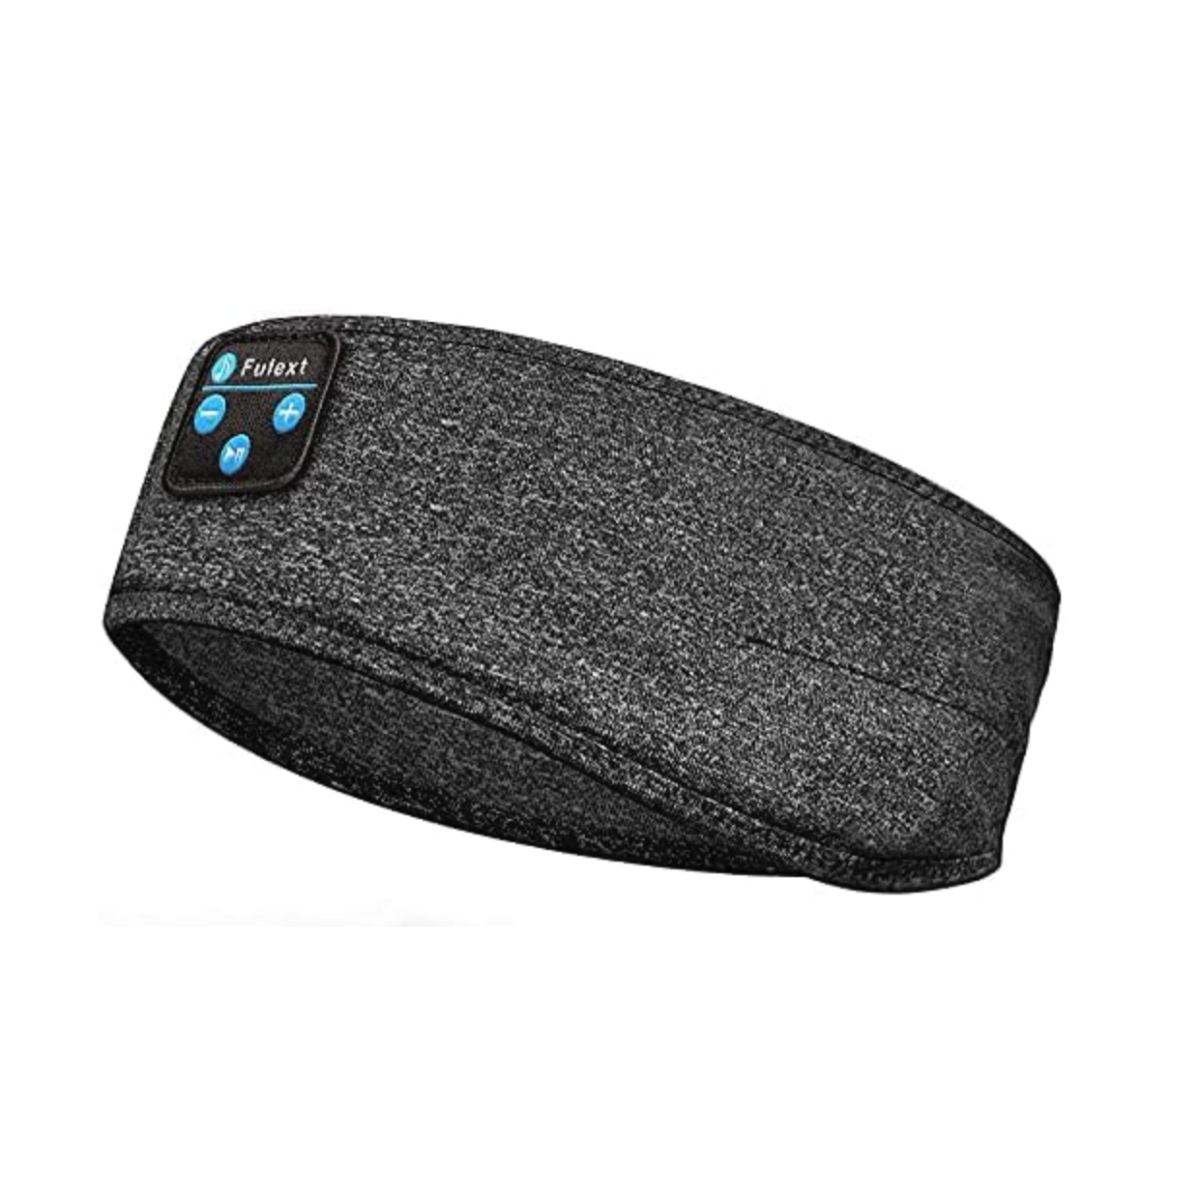 A Perytong Bluetooth Sleeping Headband